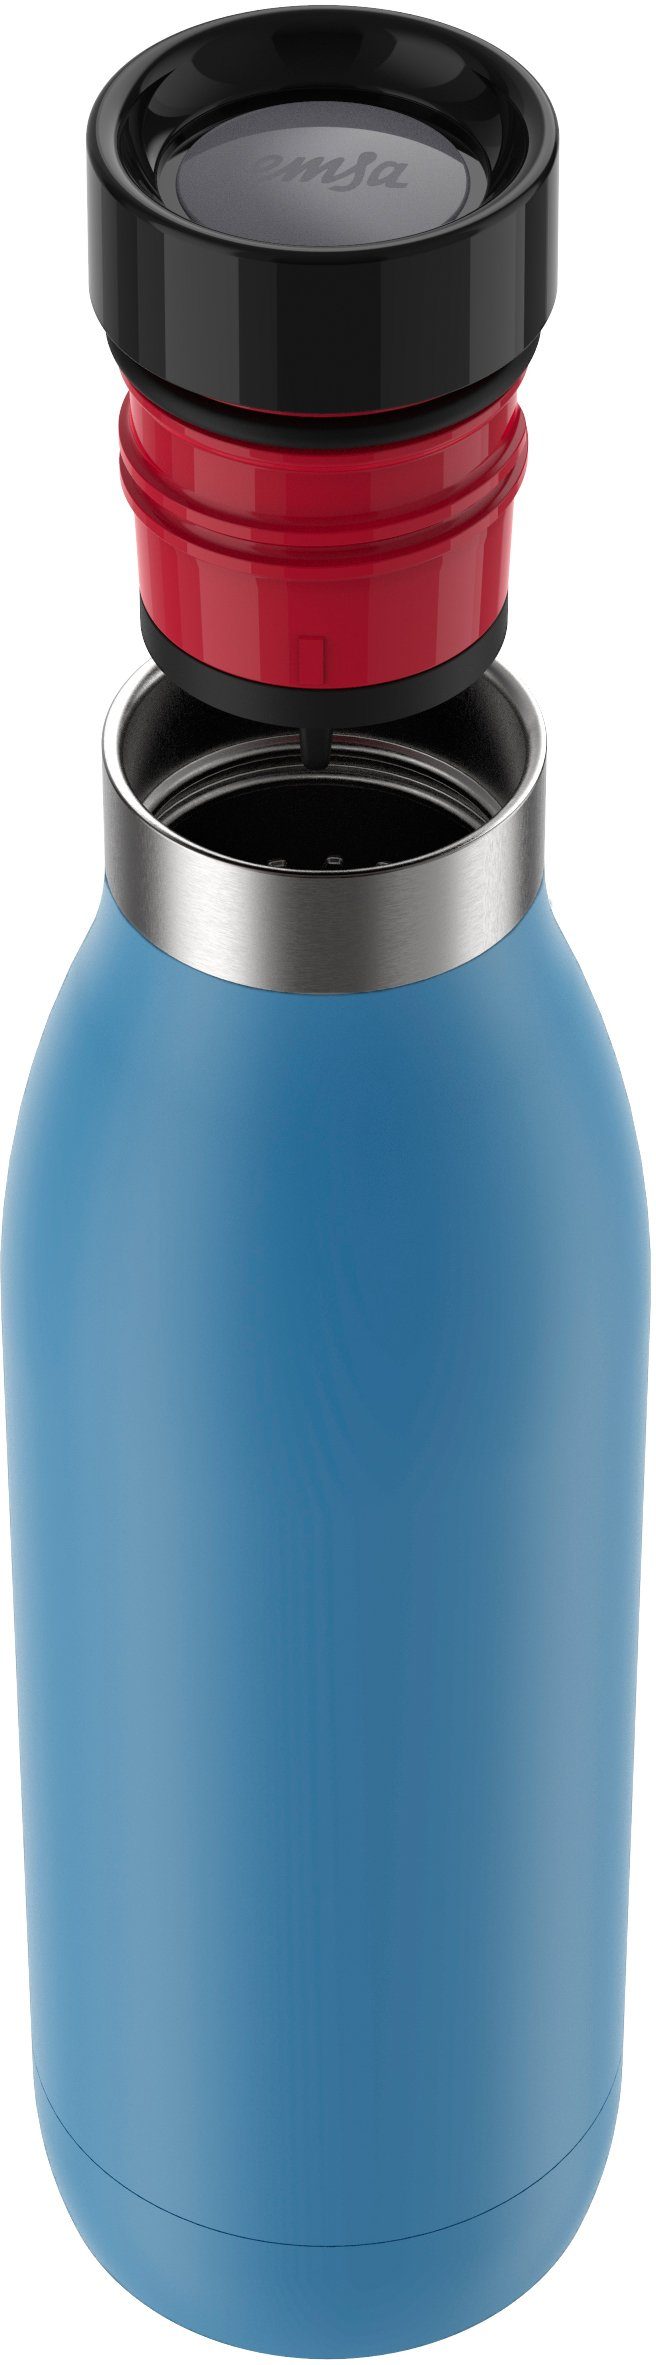 warm/24h Trinkflasche Emsa aquablau Deckel, kühl, Quick-Press Edelstahl, 12h spülmaschinenfest Bludrop Color,